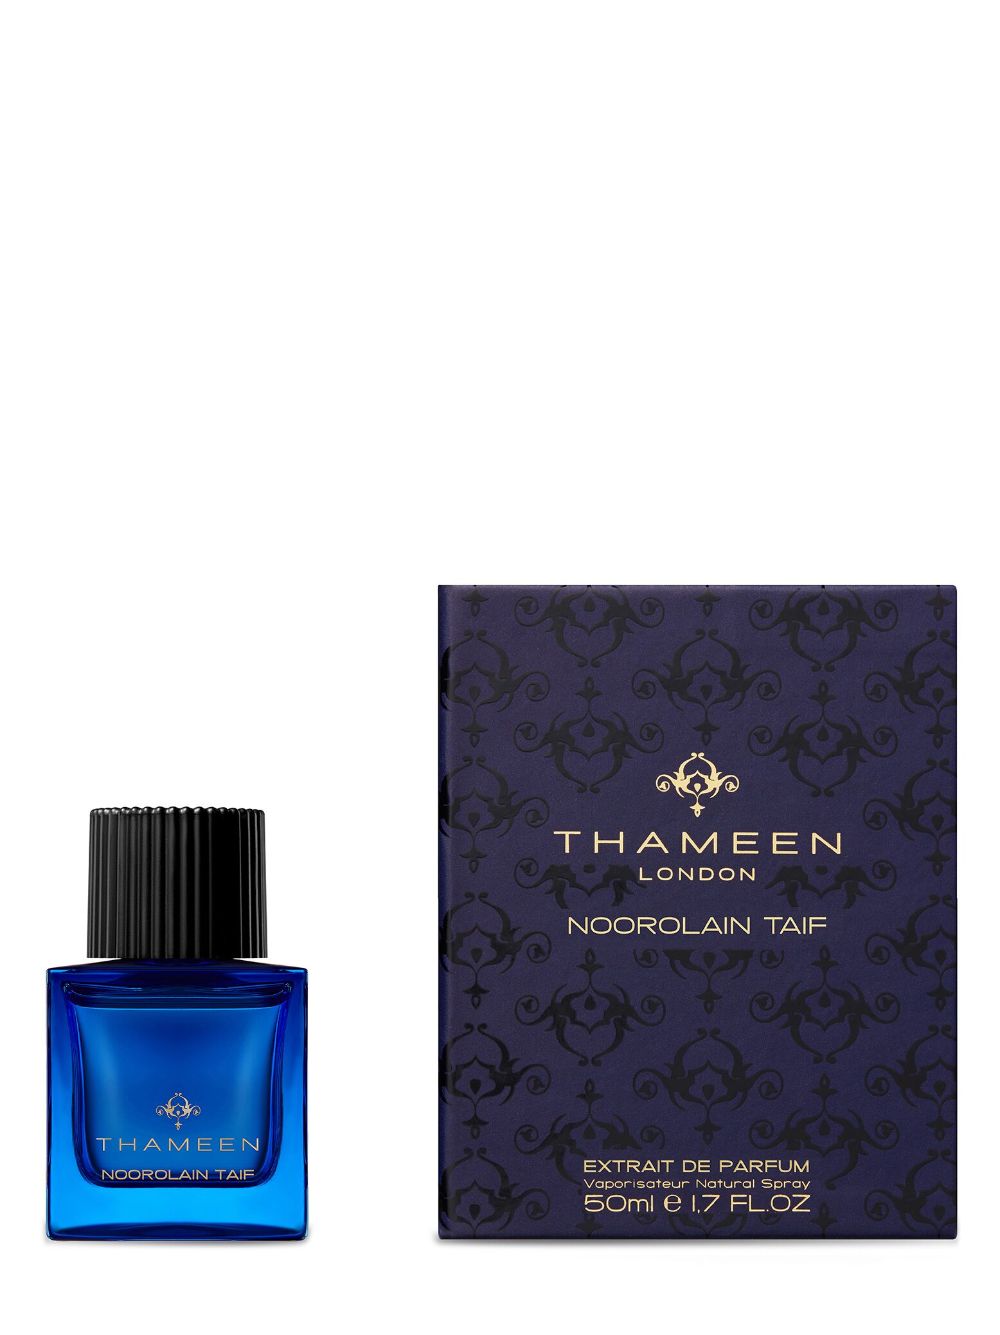 Thameen Noorolain Taif extrait de parfum - NEUTRAL